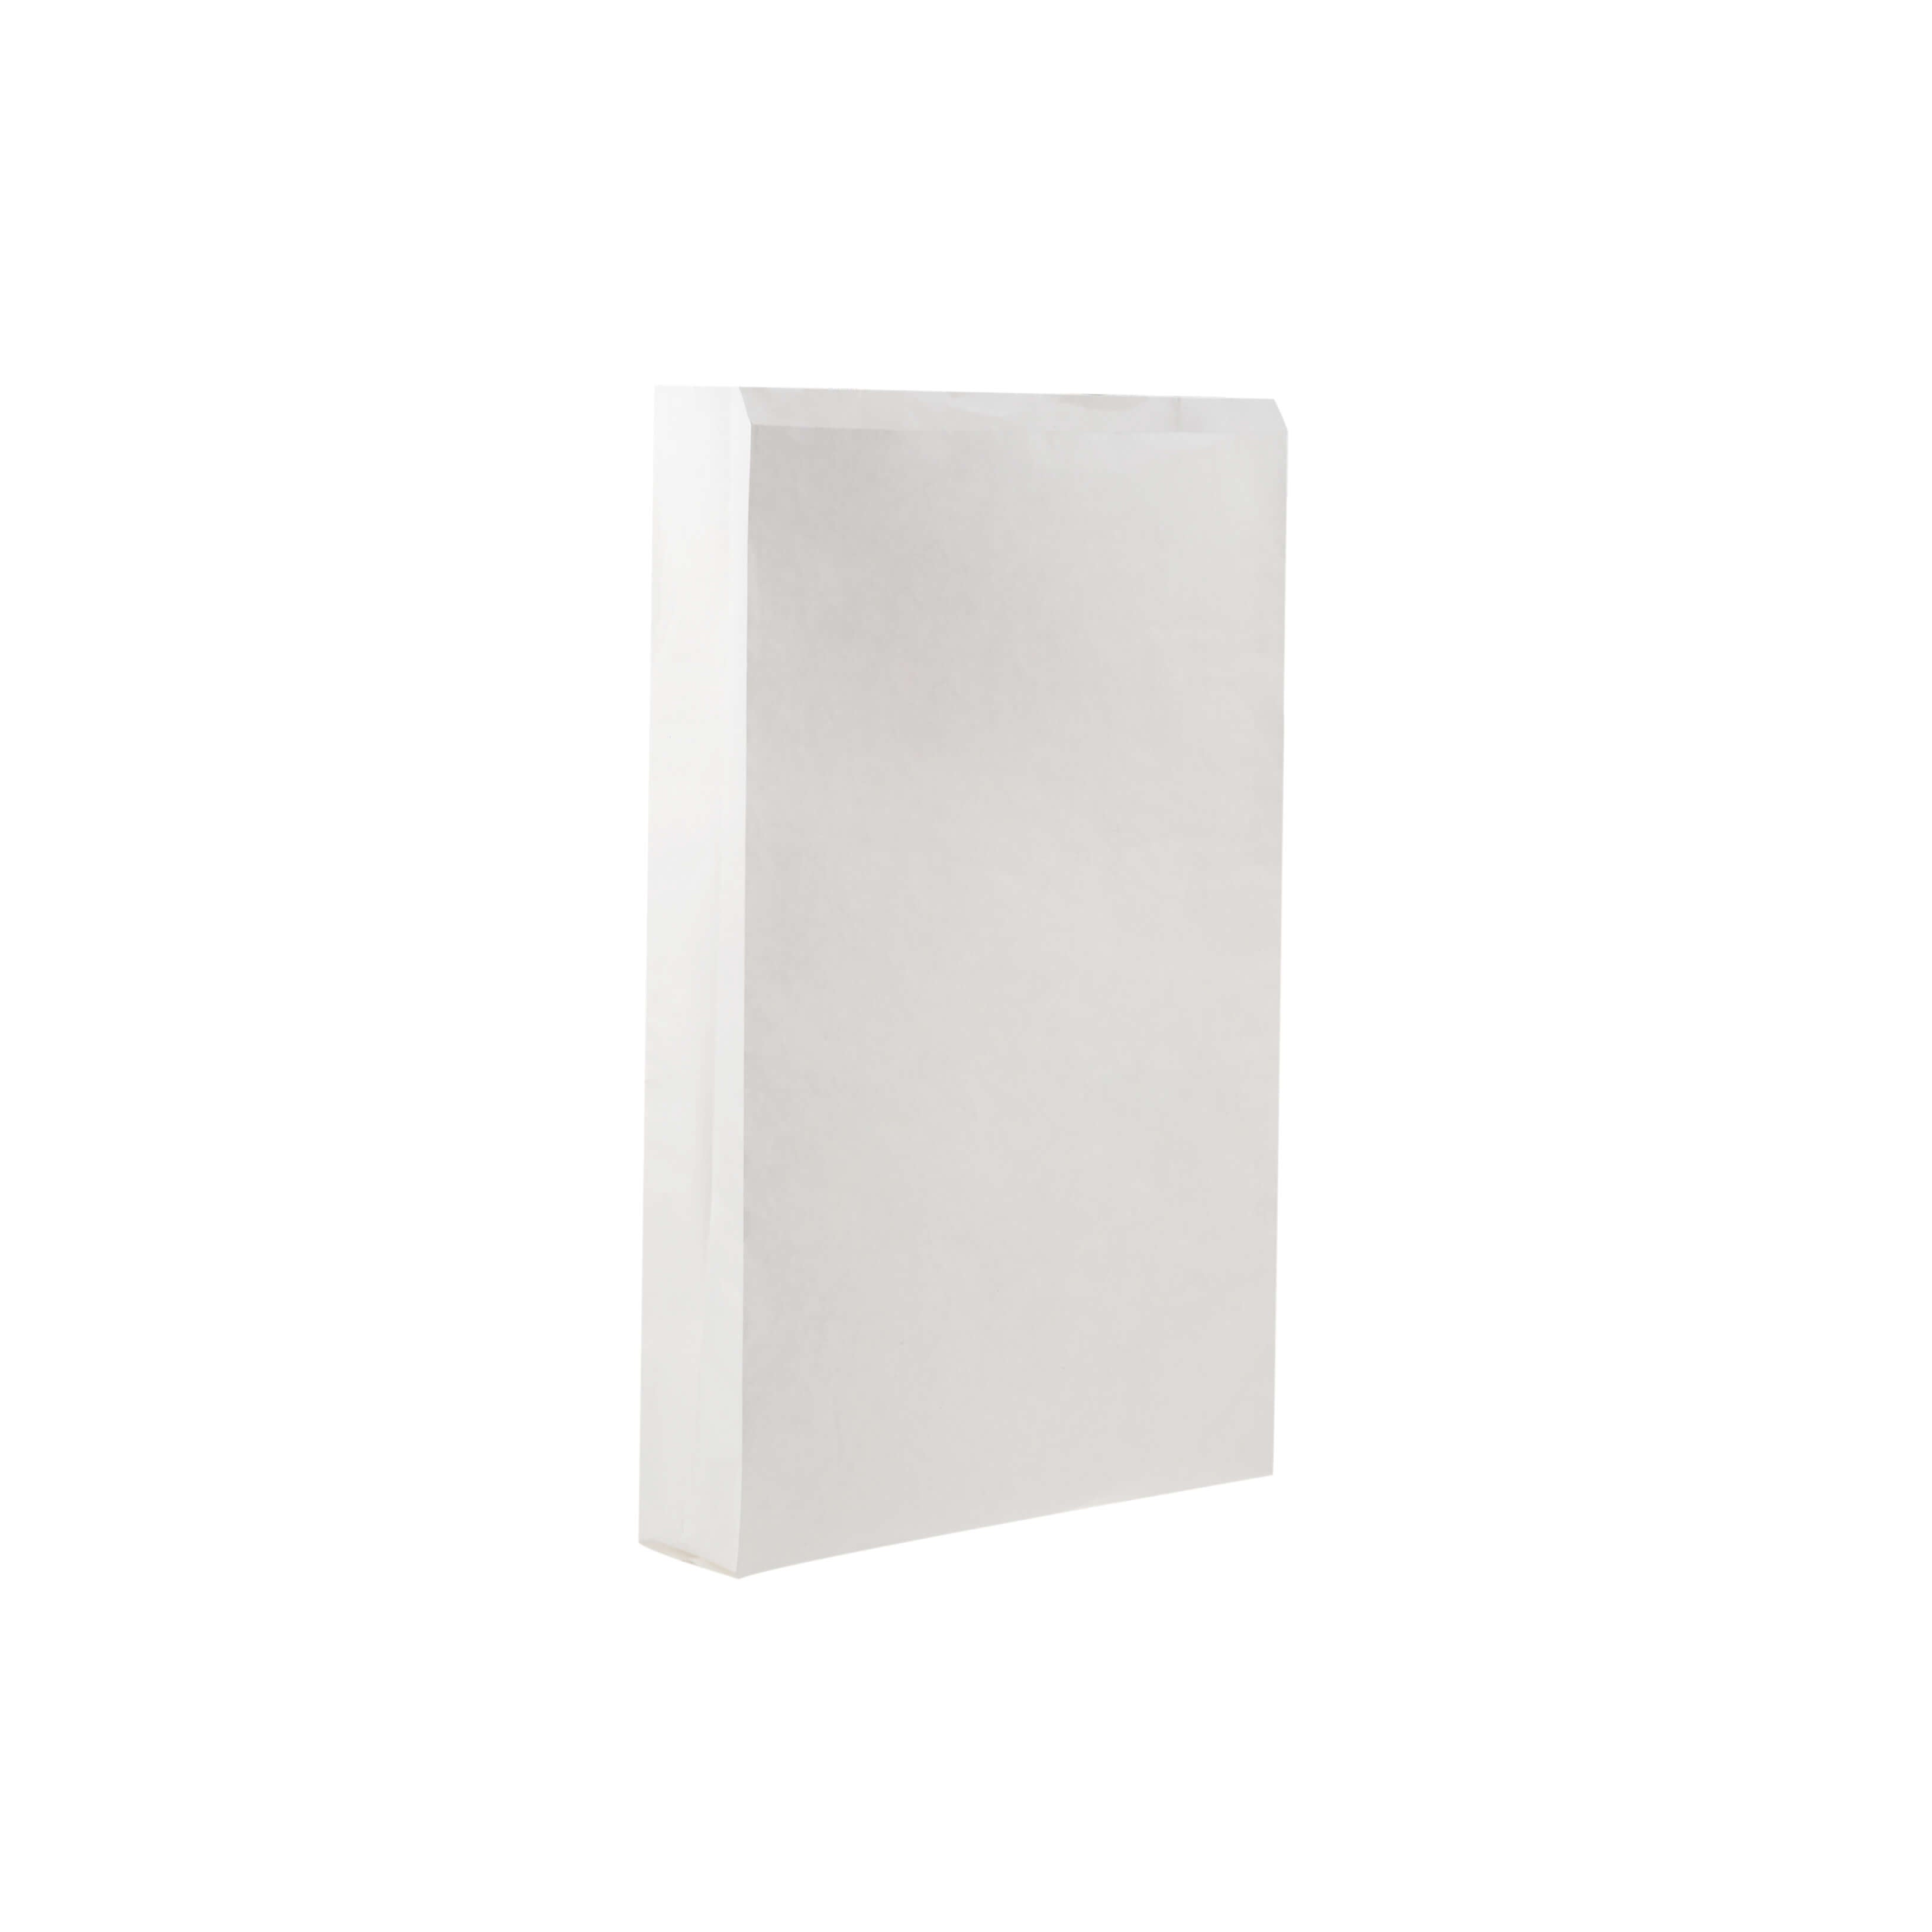 300x90x560 mm Pinch or flat bottom paper bag white - Hotpack Global